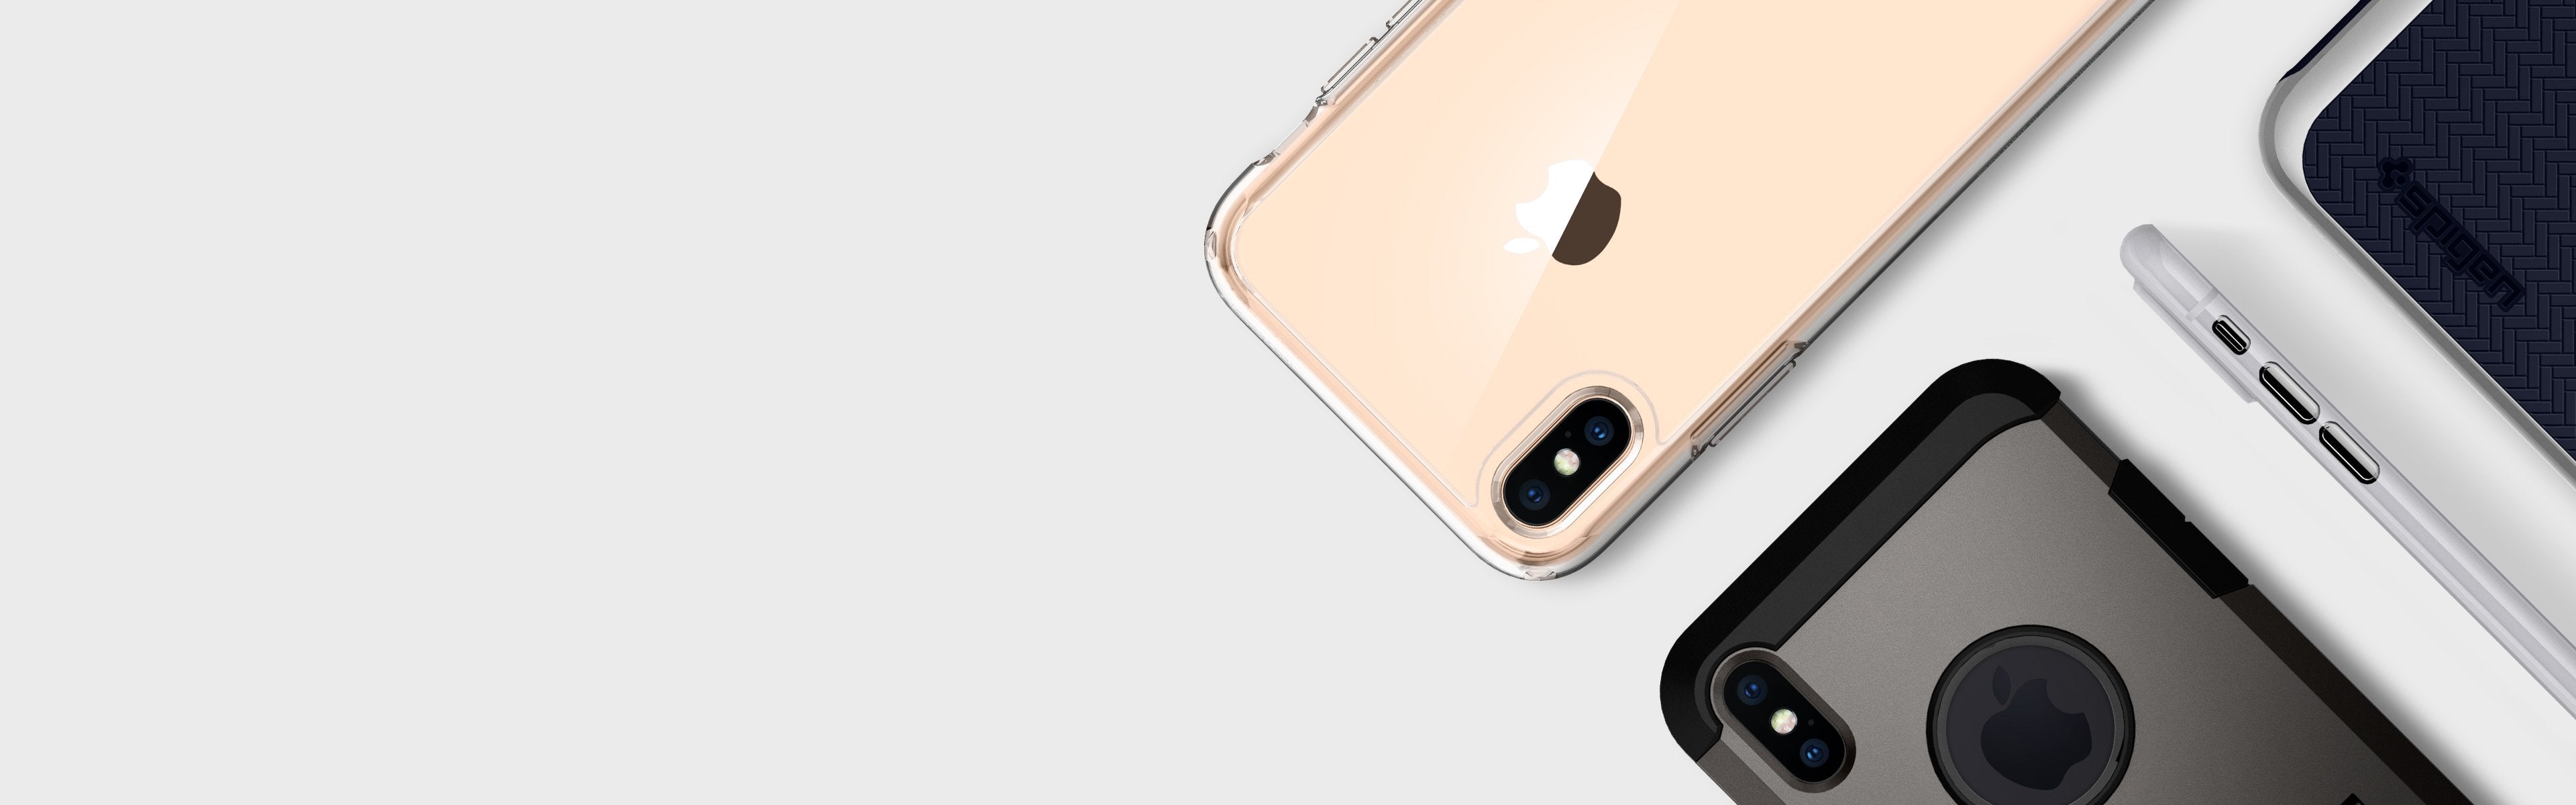 Spigen Cases for iPhone XS Max